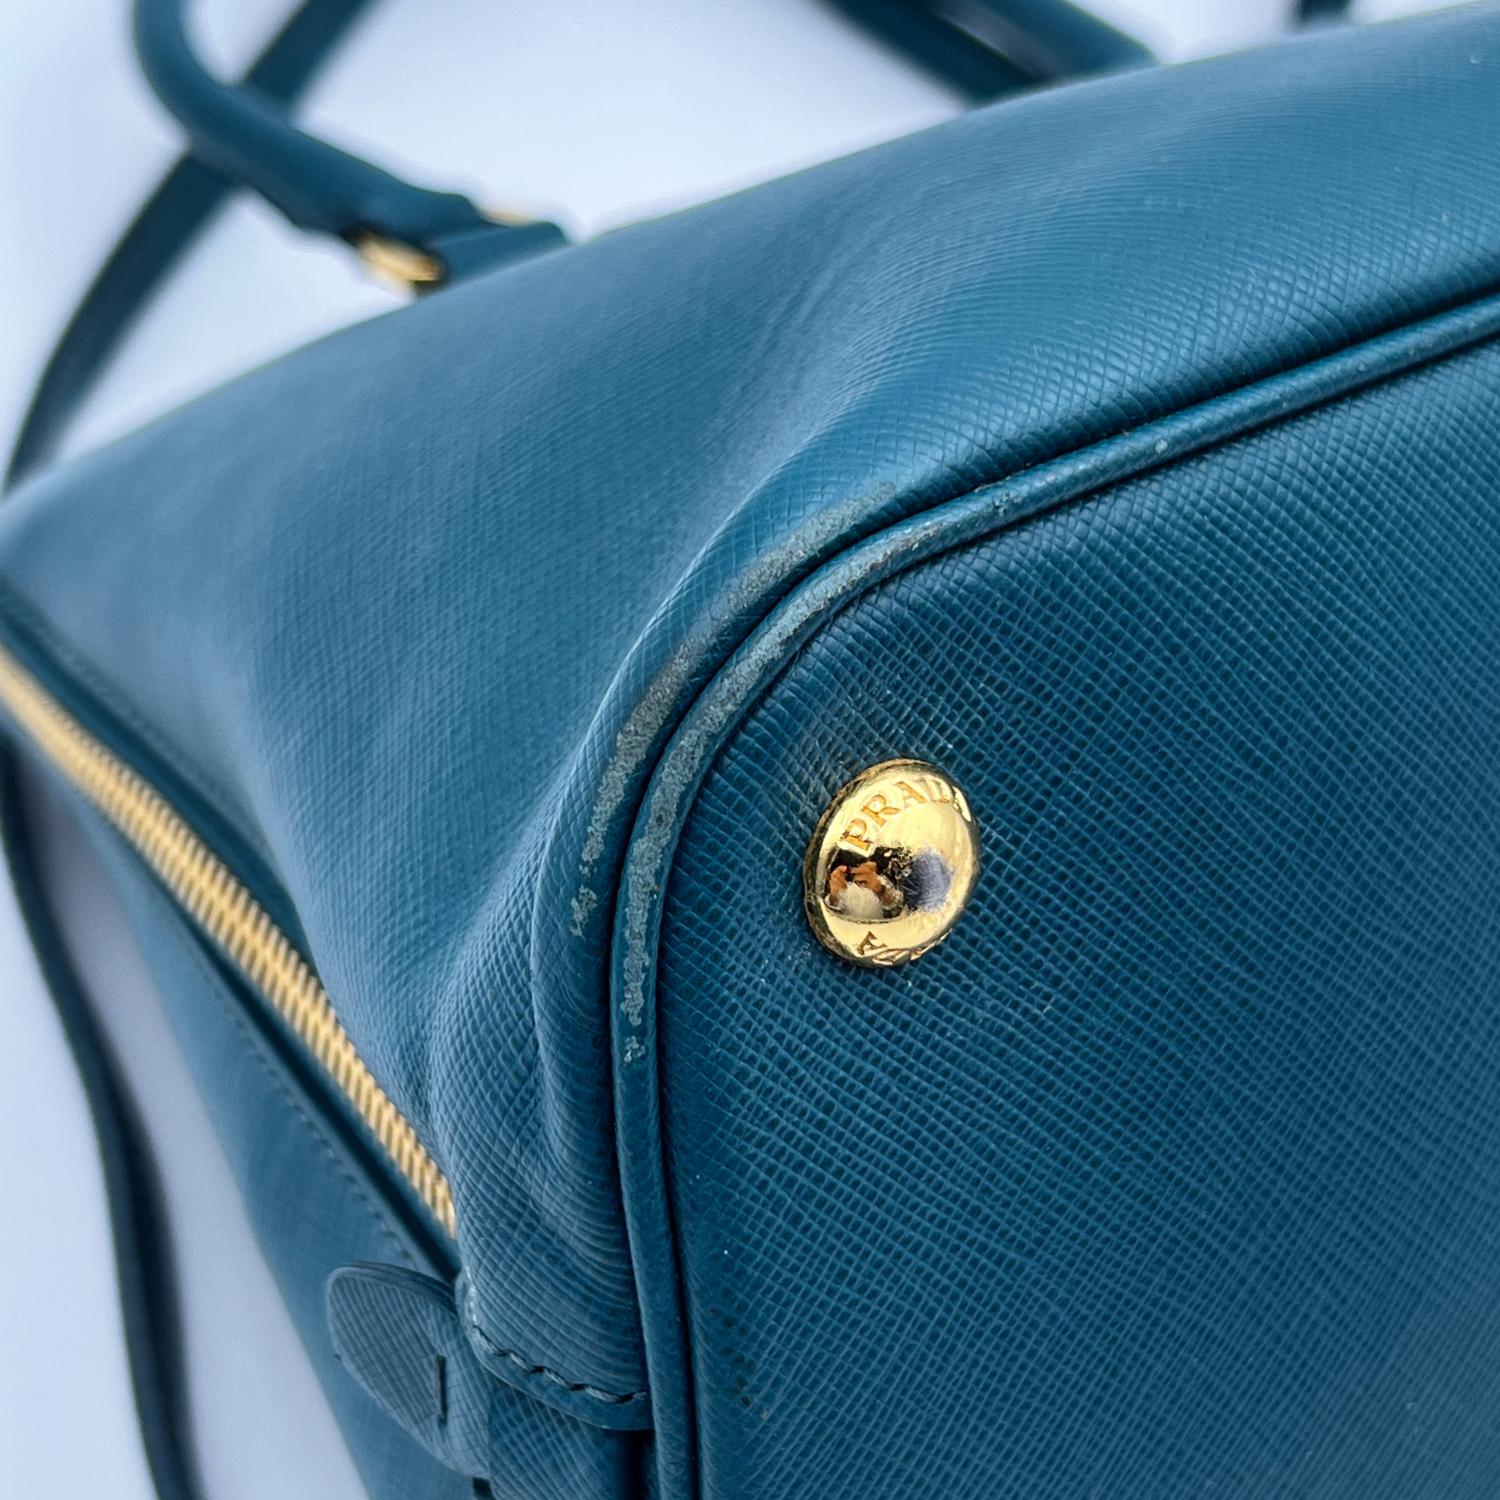 Prada Teal Saffiano Leather Promenade Tote Satchel Bag Handbag 4